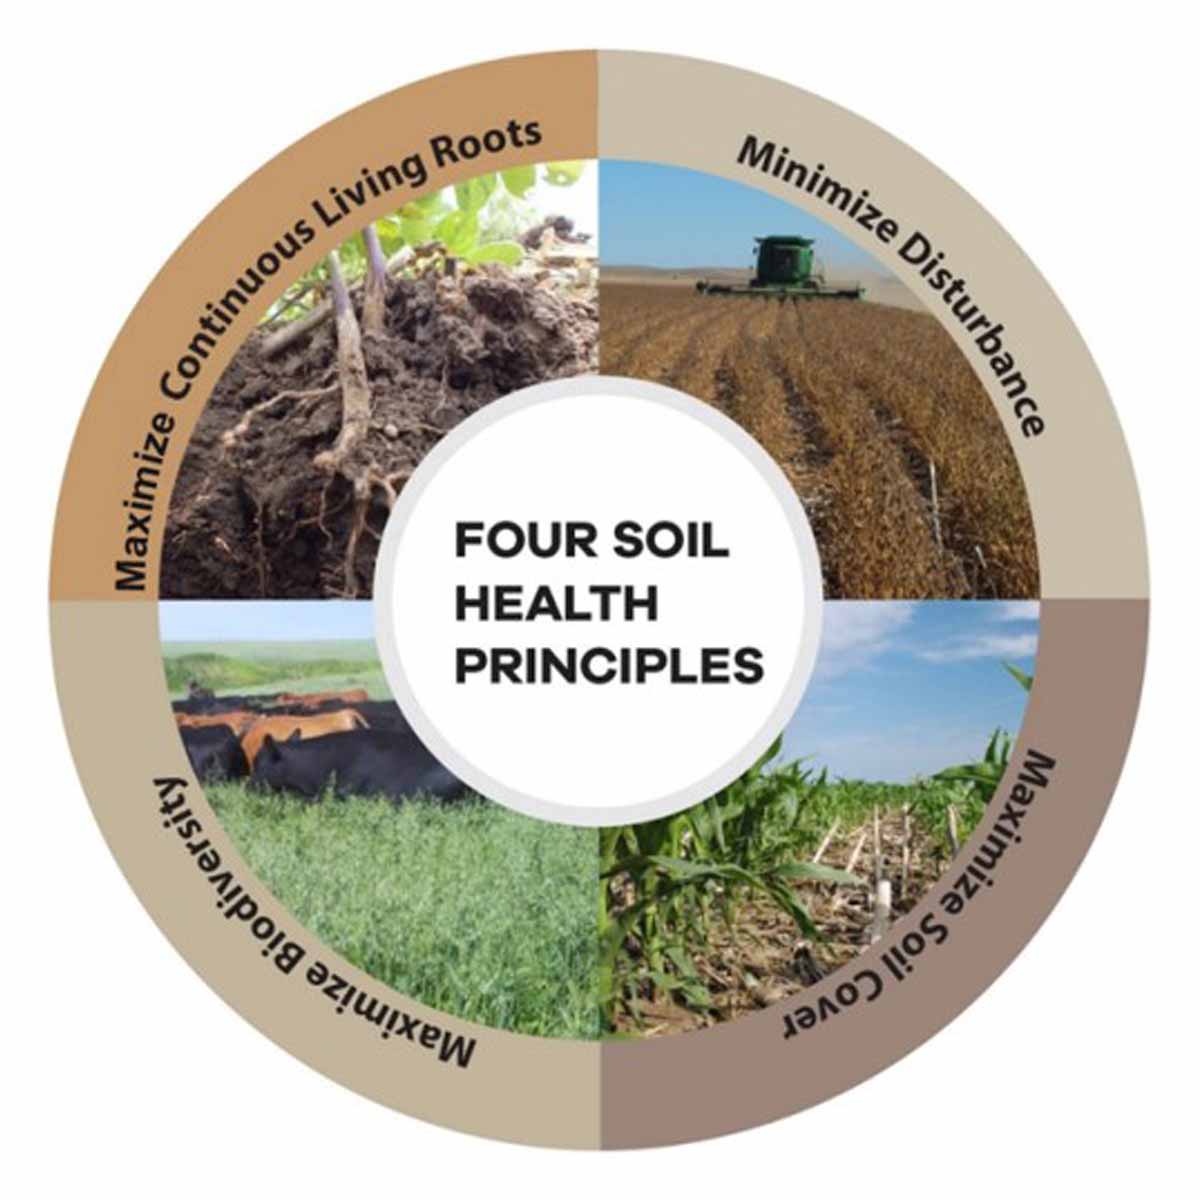 Four soil health principles graphic